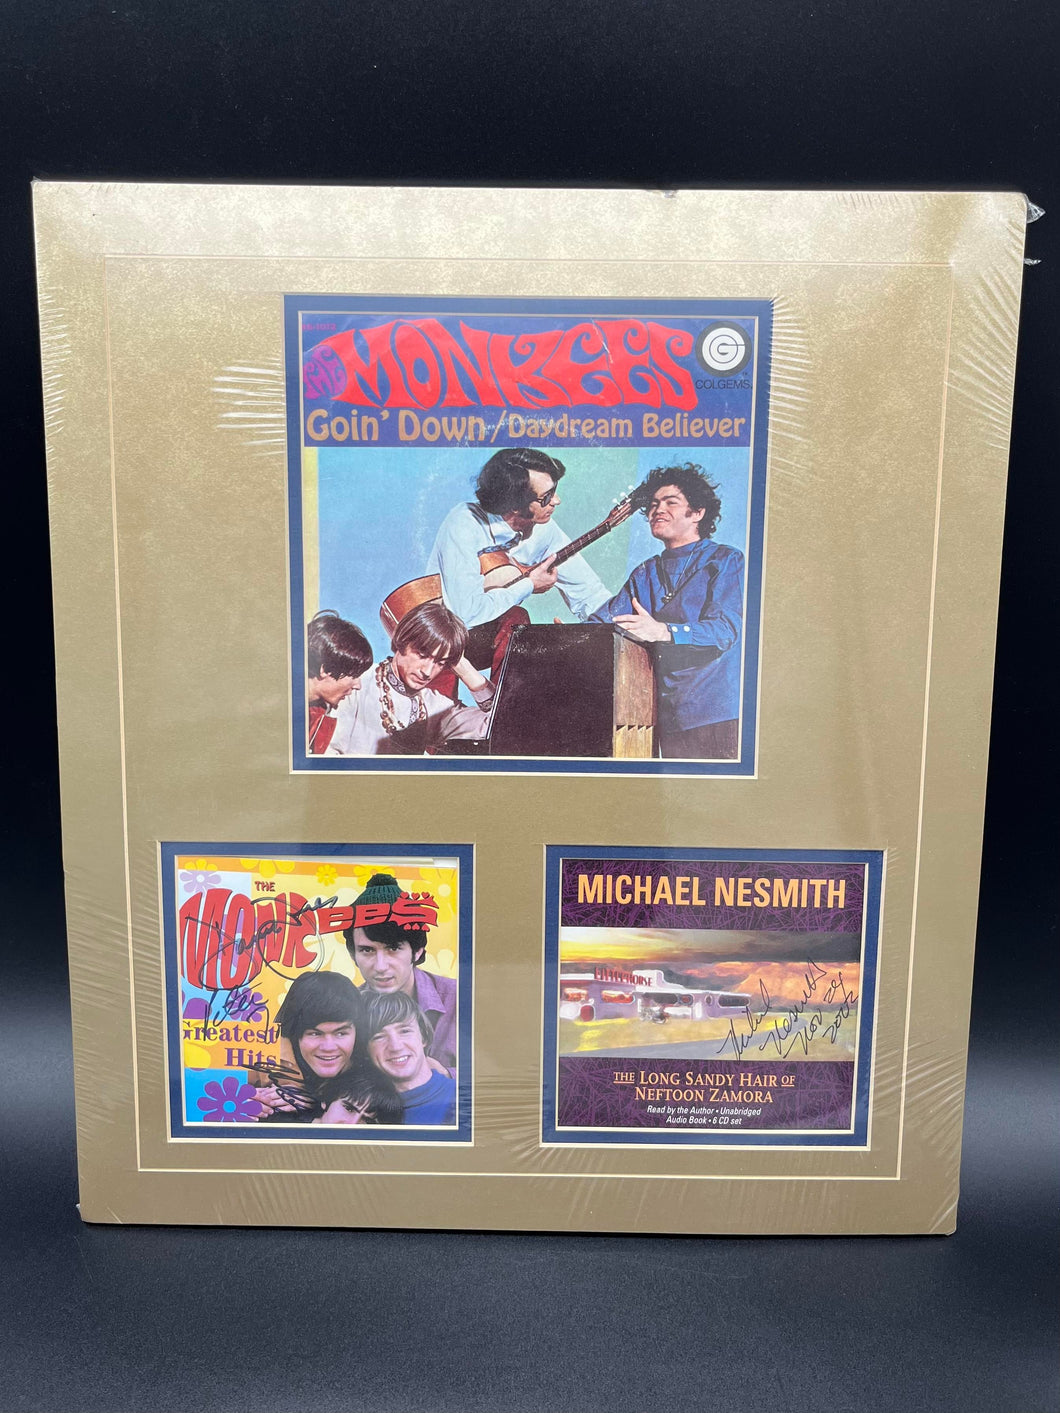 The Monkees Signed Memorabilia